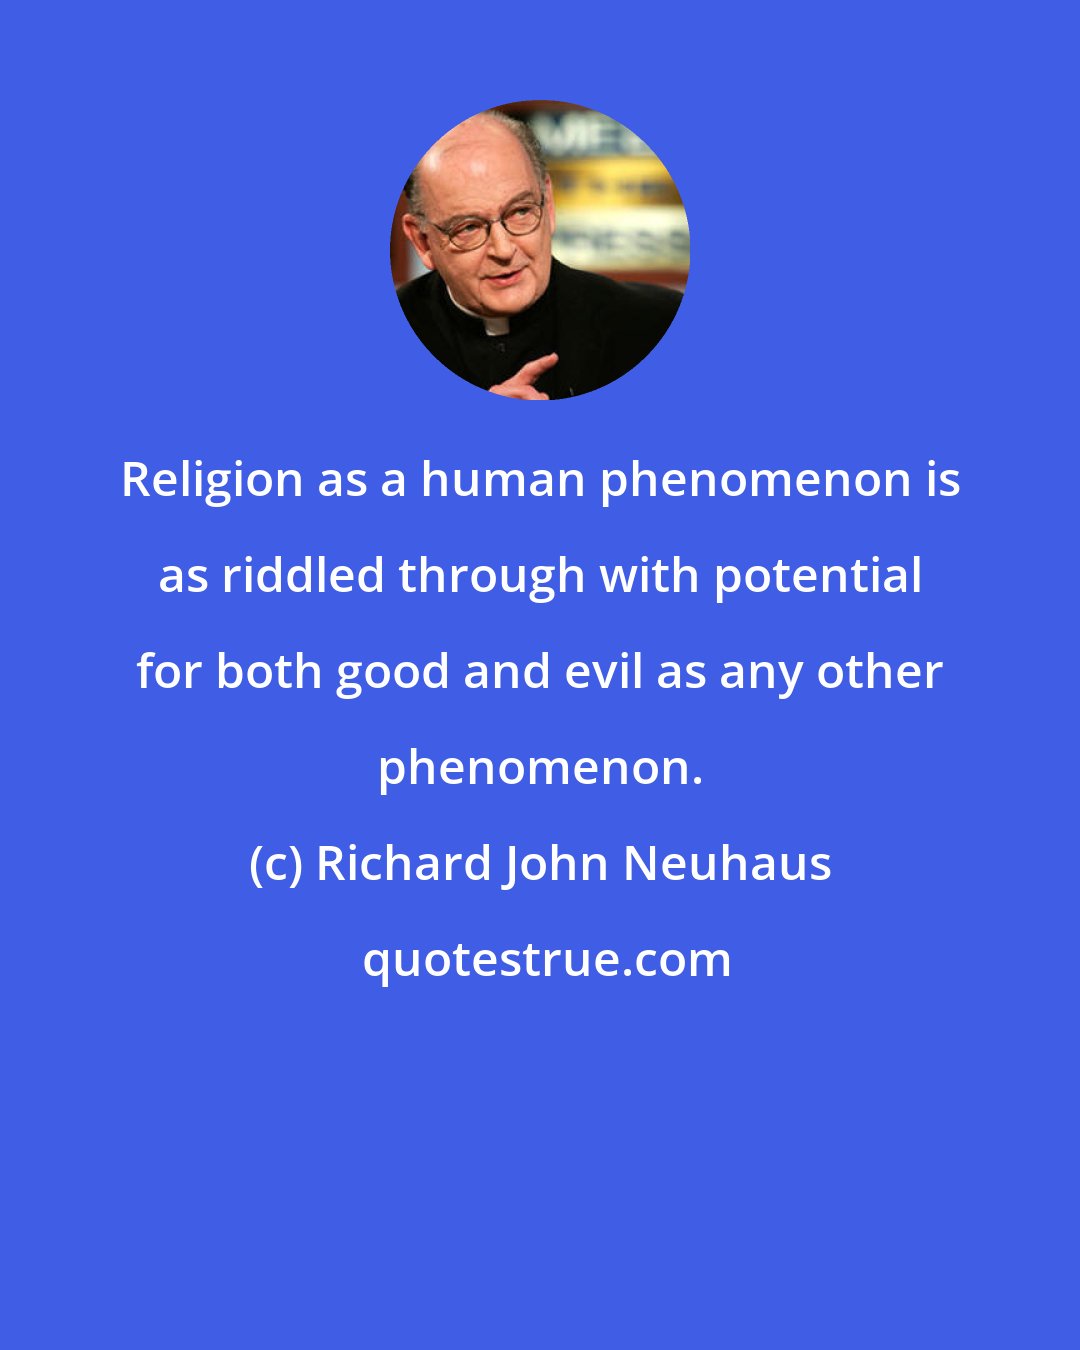 Richard John Neuhaus: Religion as a human phenomenon is as riddled through with potential for both good and evil as any other phenomenon.